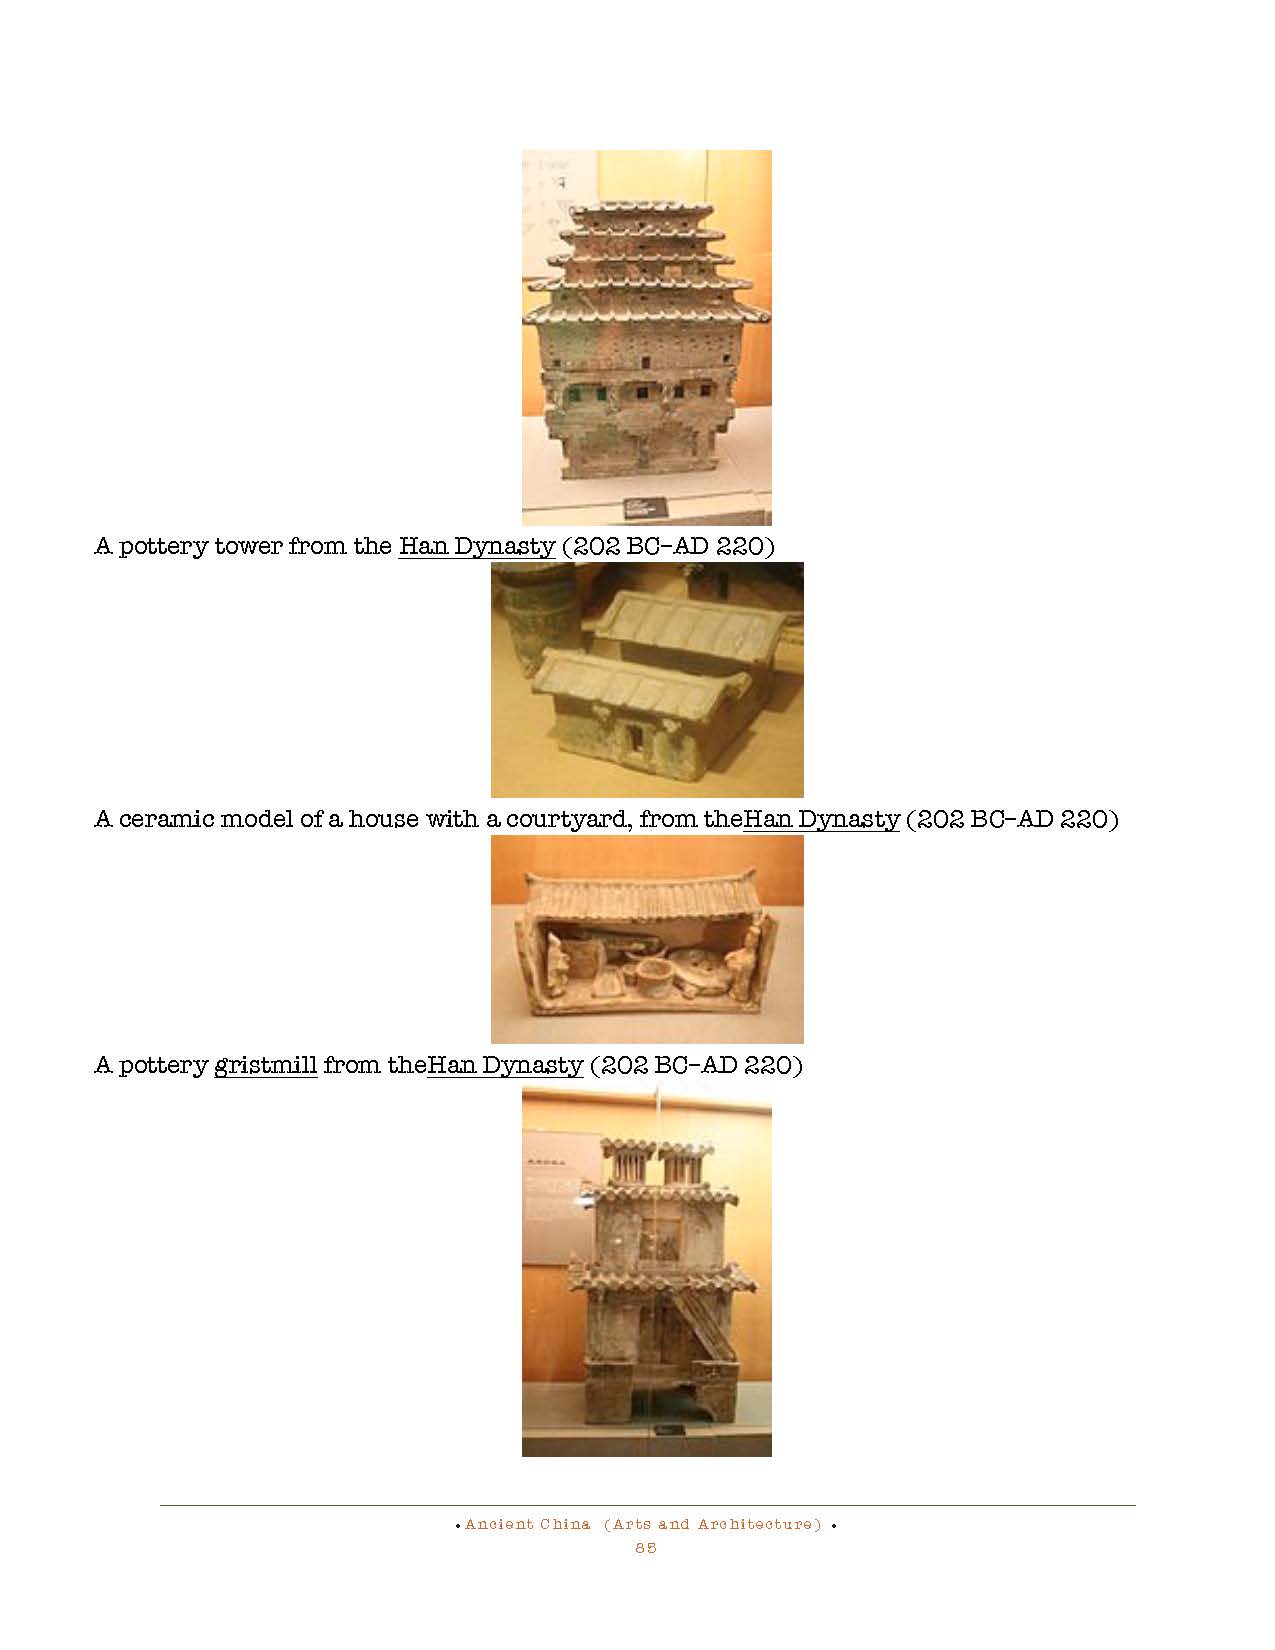 HOCE- Ancient China Notes_Page_085.jpg